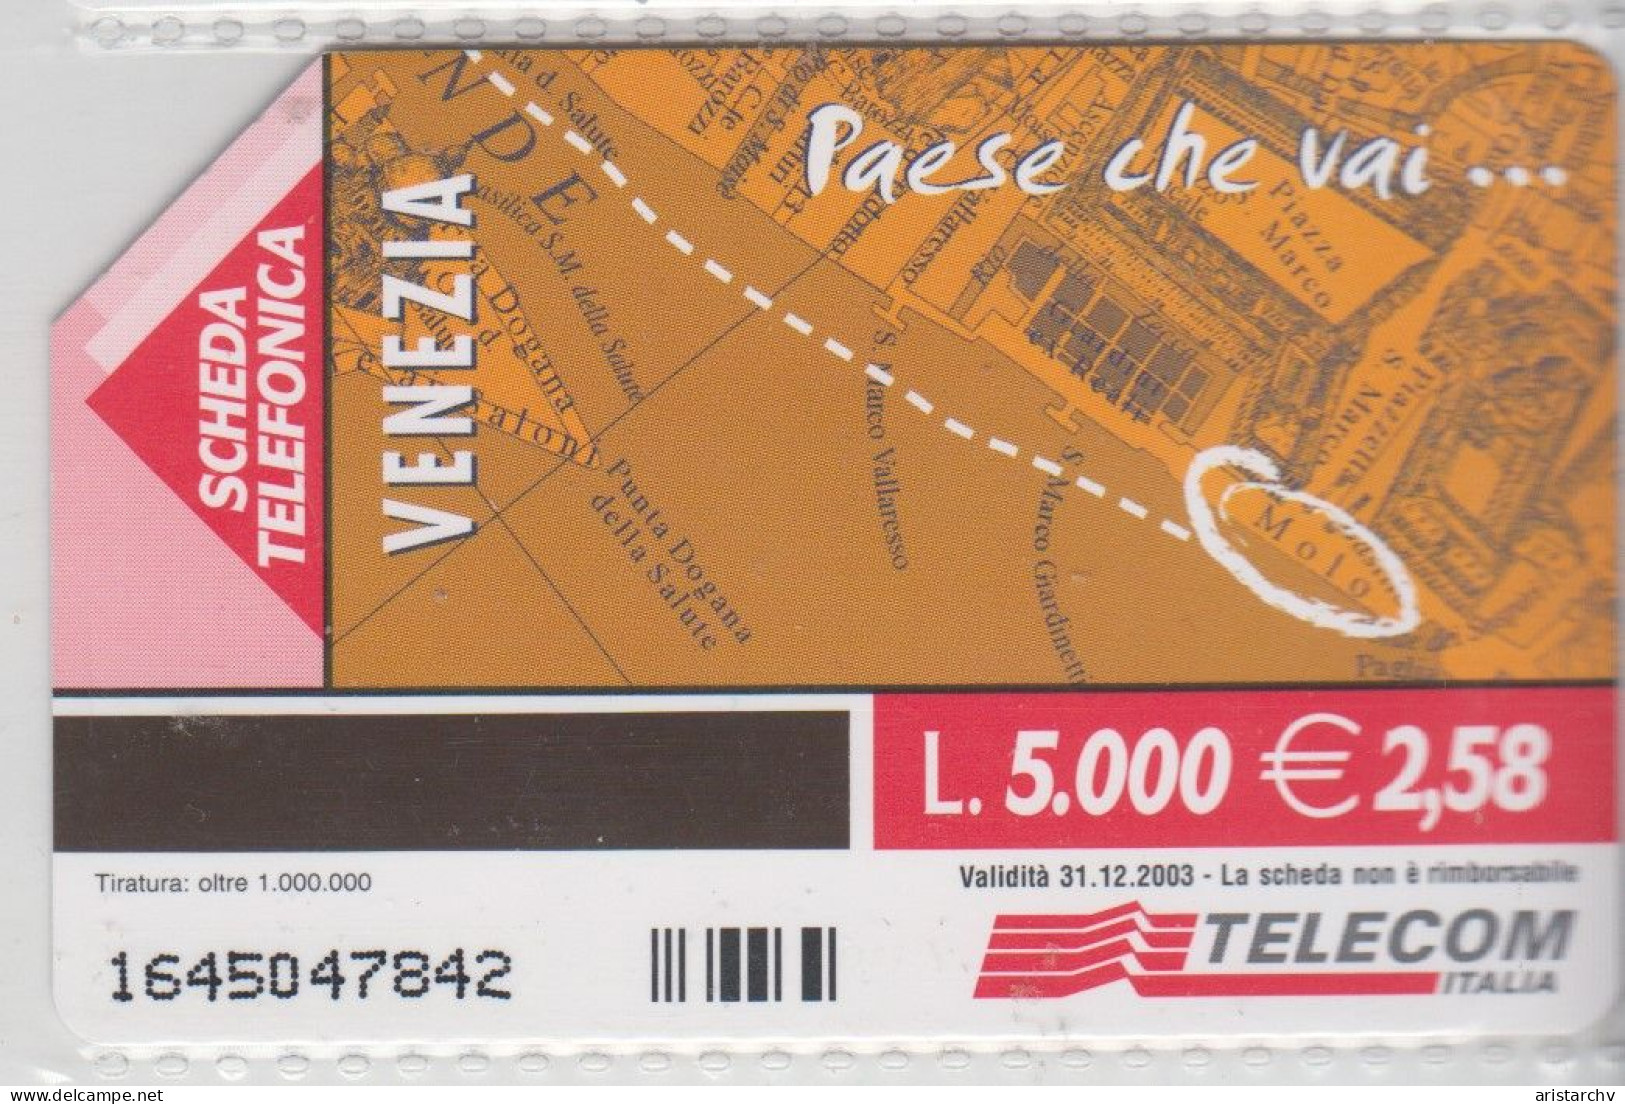 ITALY 2003 TRANSPORT YOU FIND TAXI BICYCLE VENEZIA SENT MARCO PALACE GONDOLA RIKSHA 4 CARDS - Públicas Ordinarias